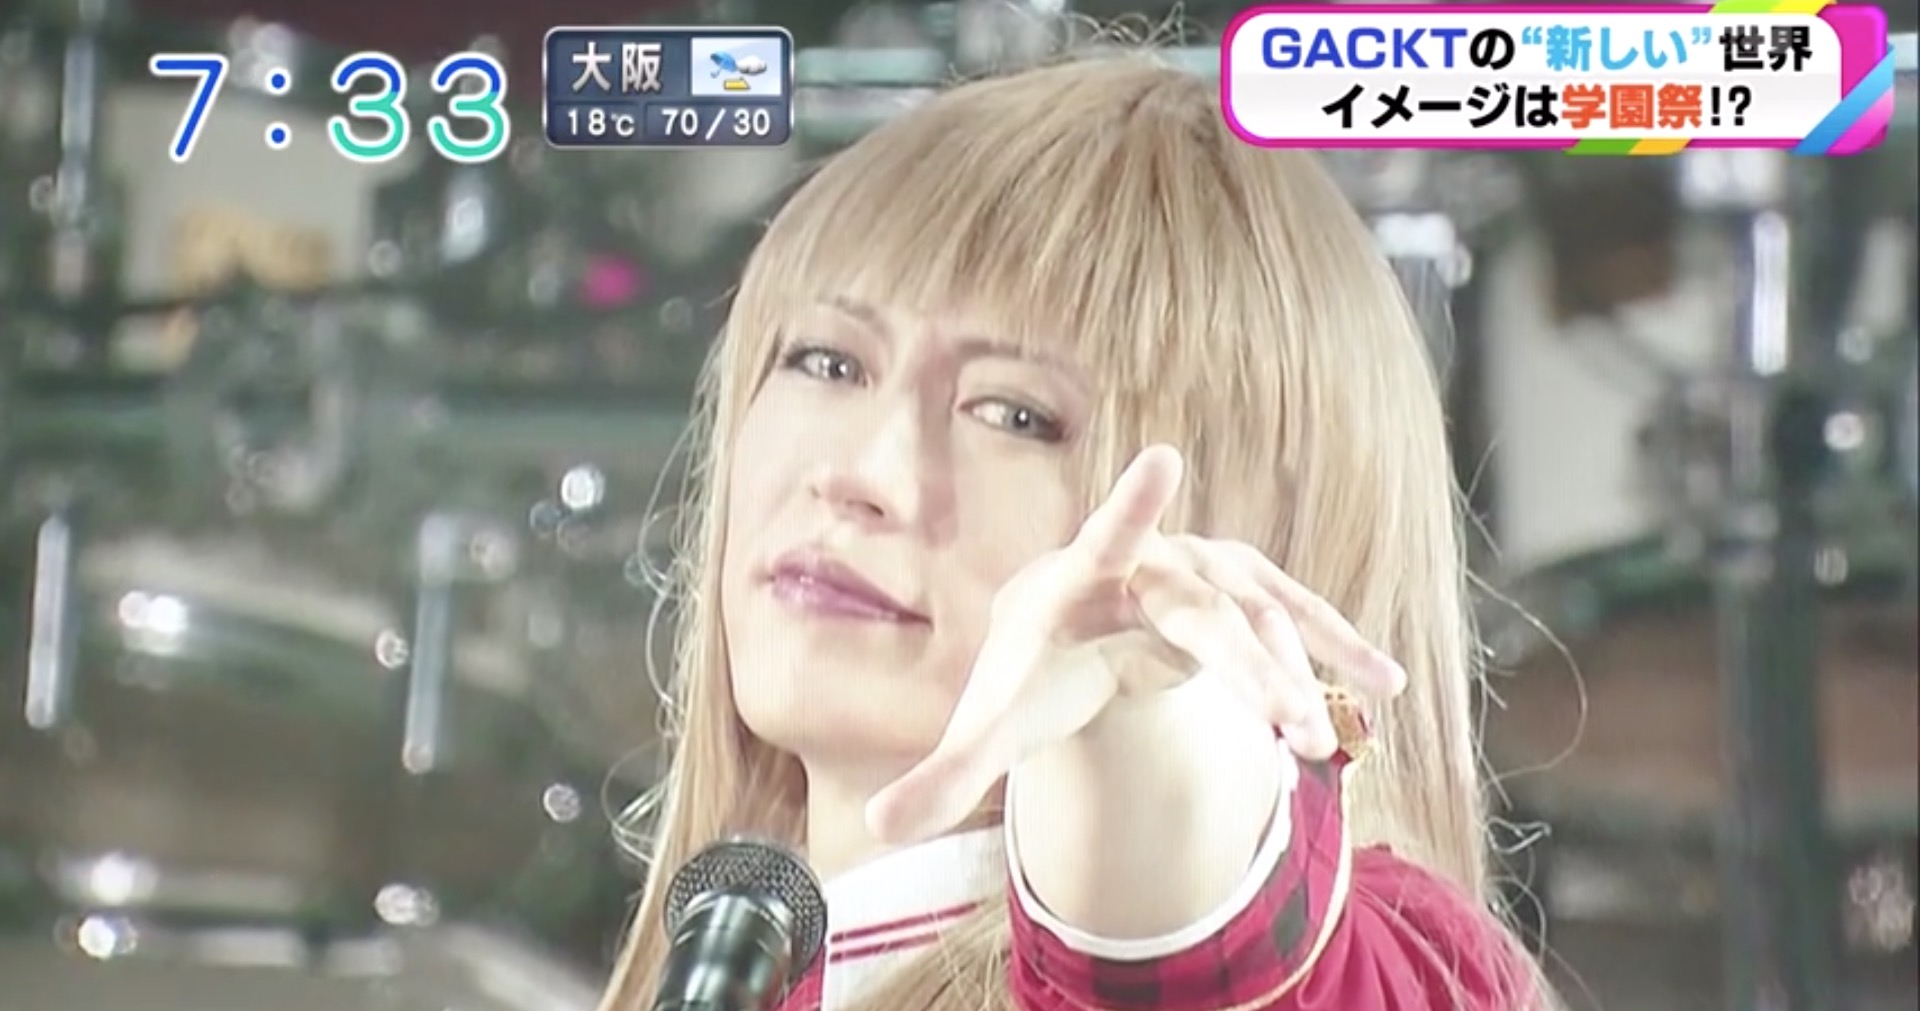 VIDEO – Camui Gakuen in Nagoya, servizio televisivo VIDEO – Camui Gakuen in Nagoya, tv report